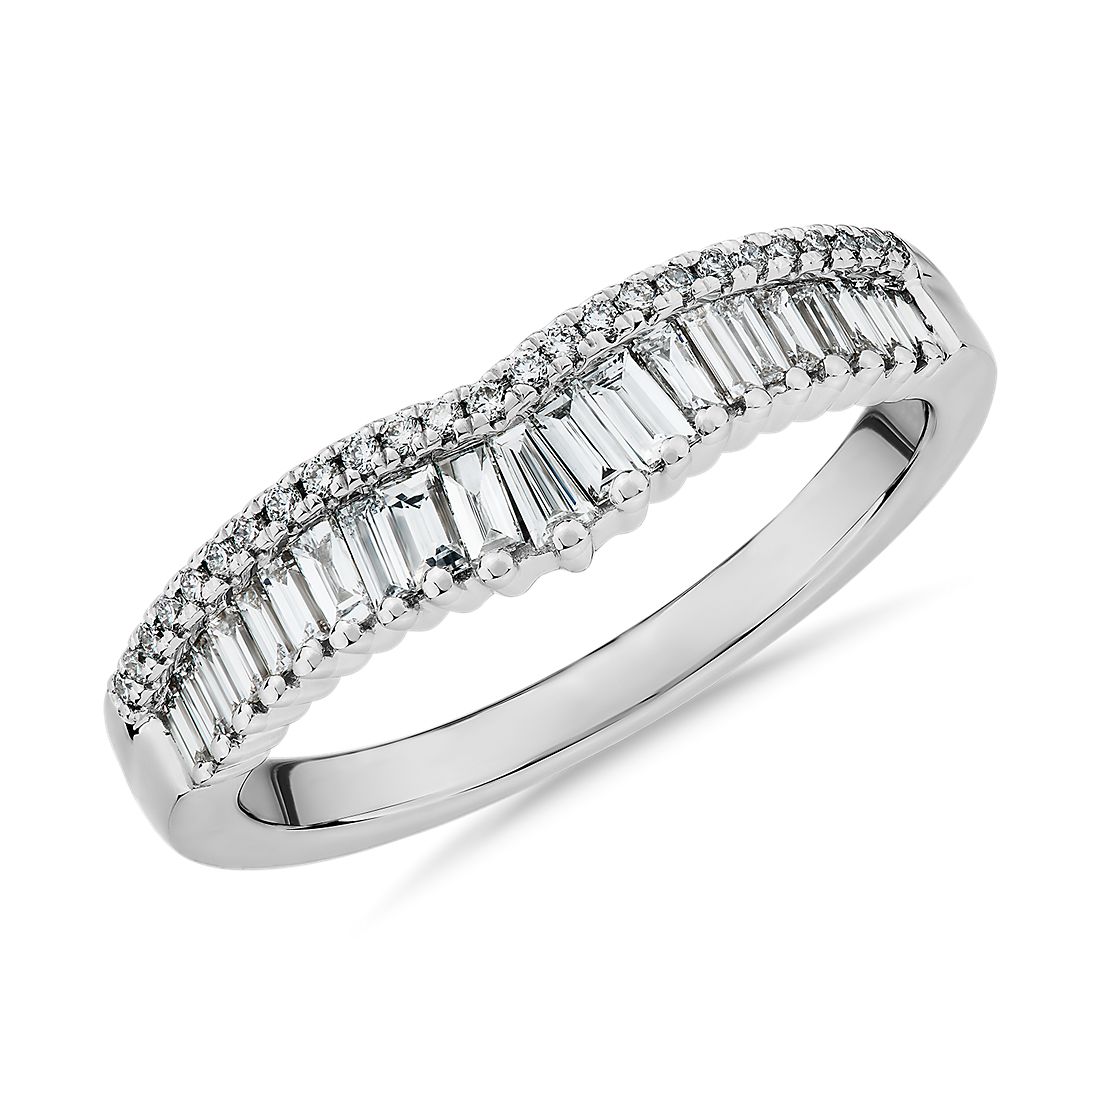 ZAC ZAC POSEN Baguette & Pavé Diamond Crown Curved Wedding Ring in 14k White Gold (3/8 ct. tw.)